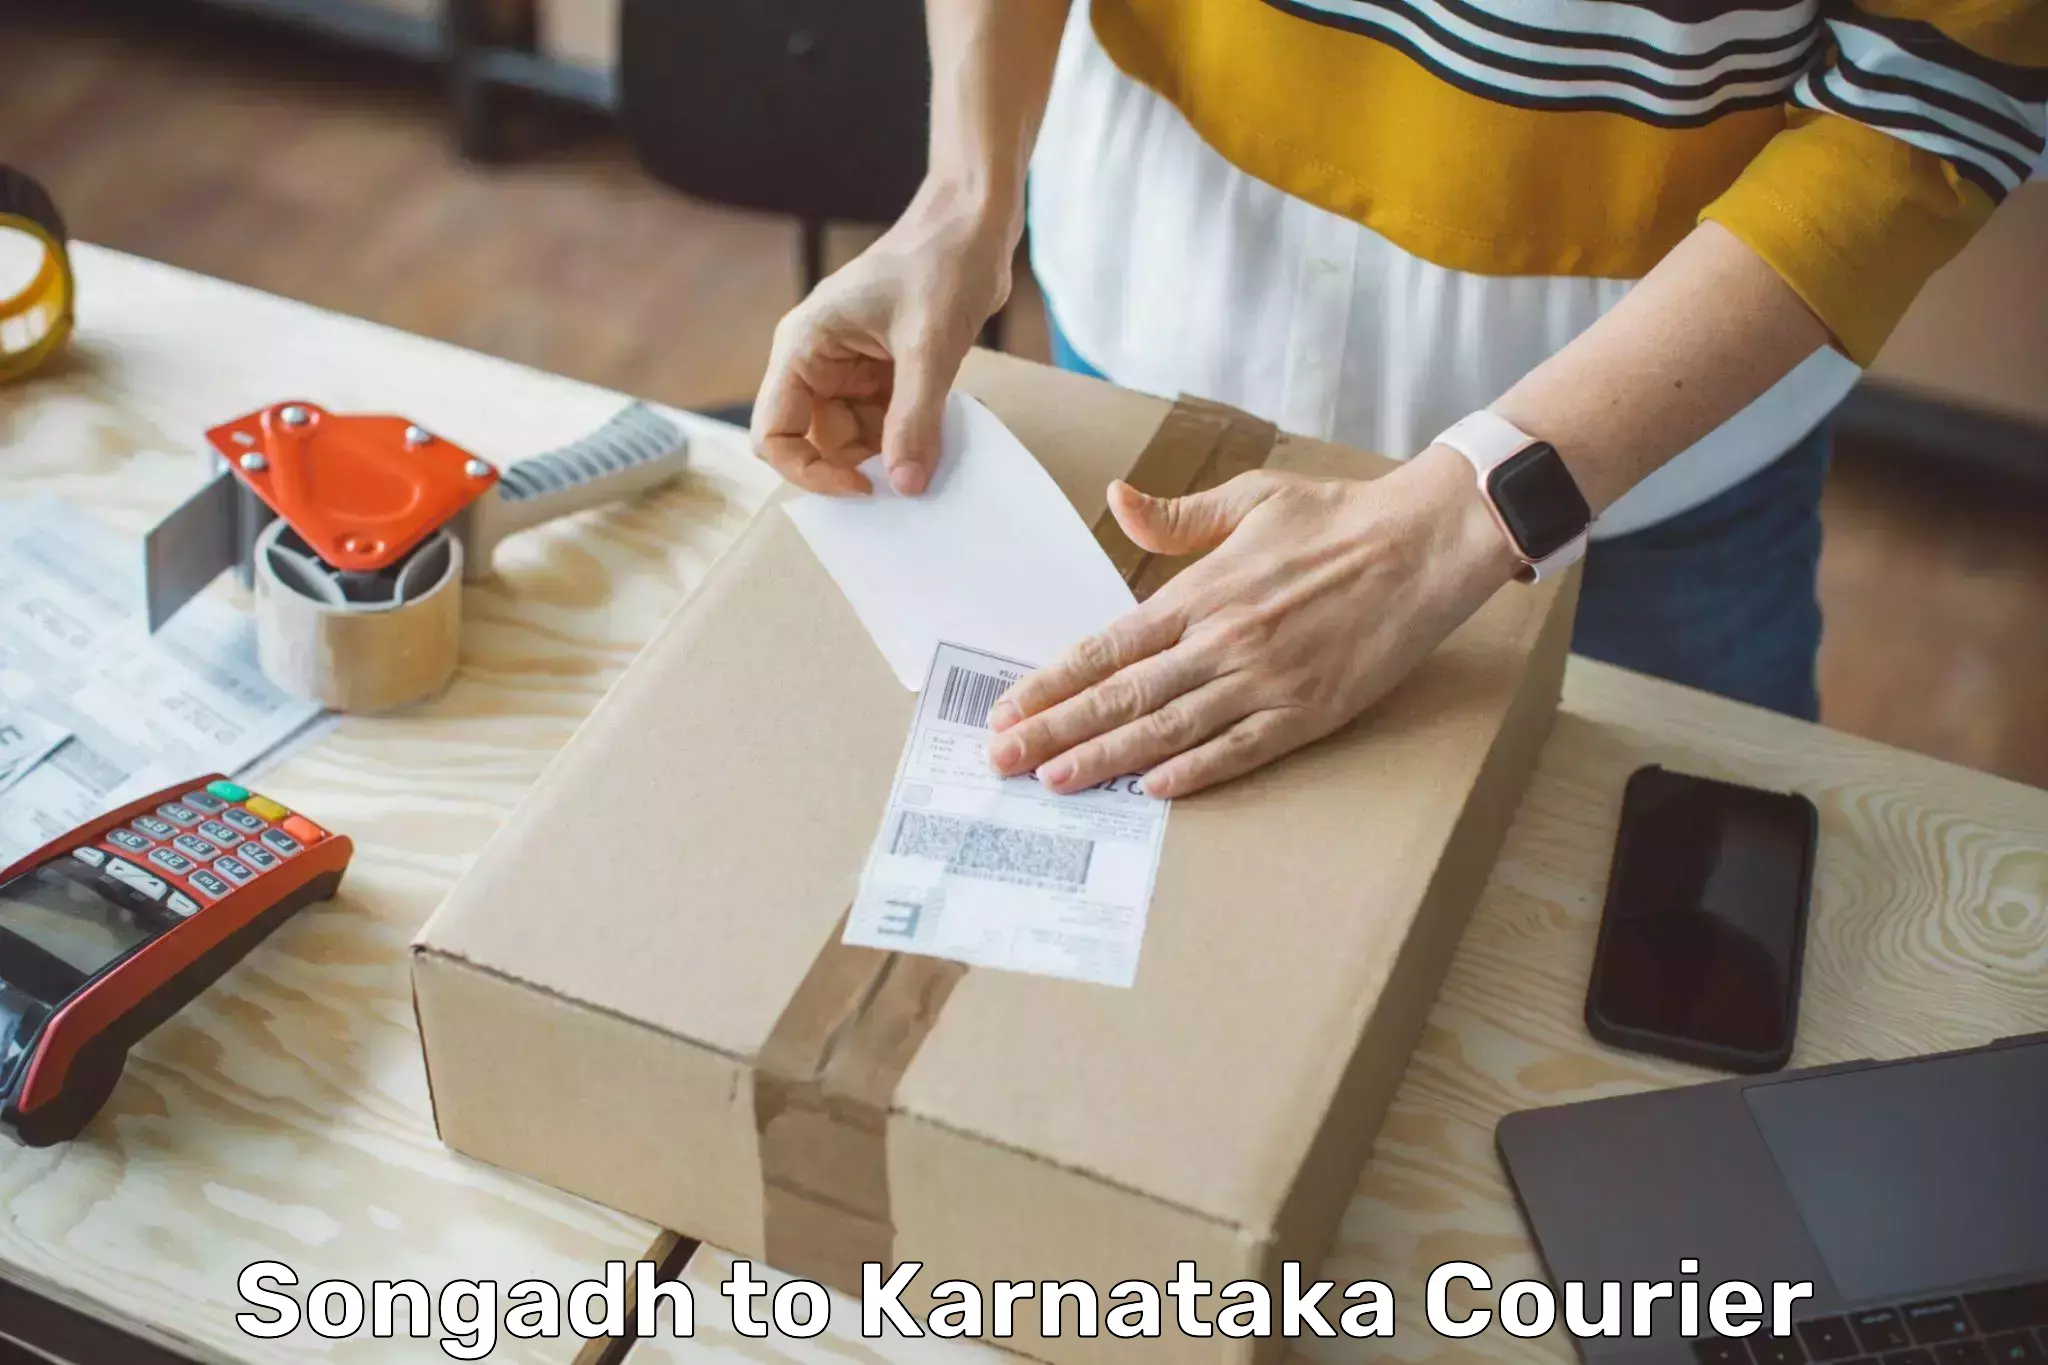 Bulk courier orders in Songadh to Karnataka